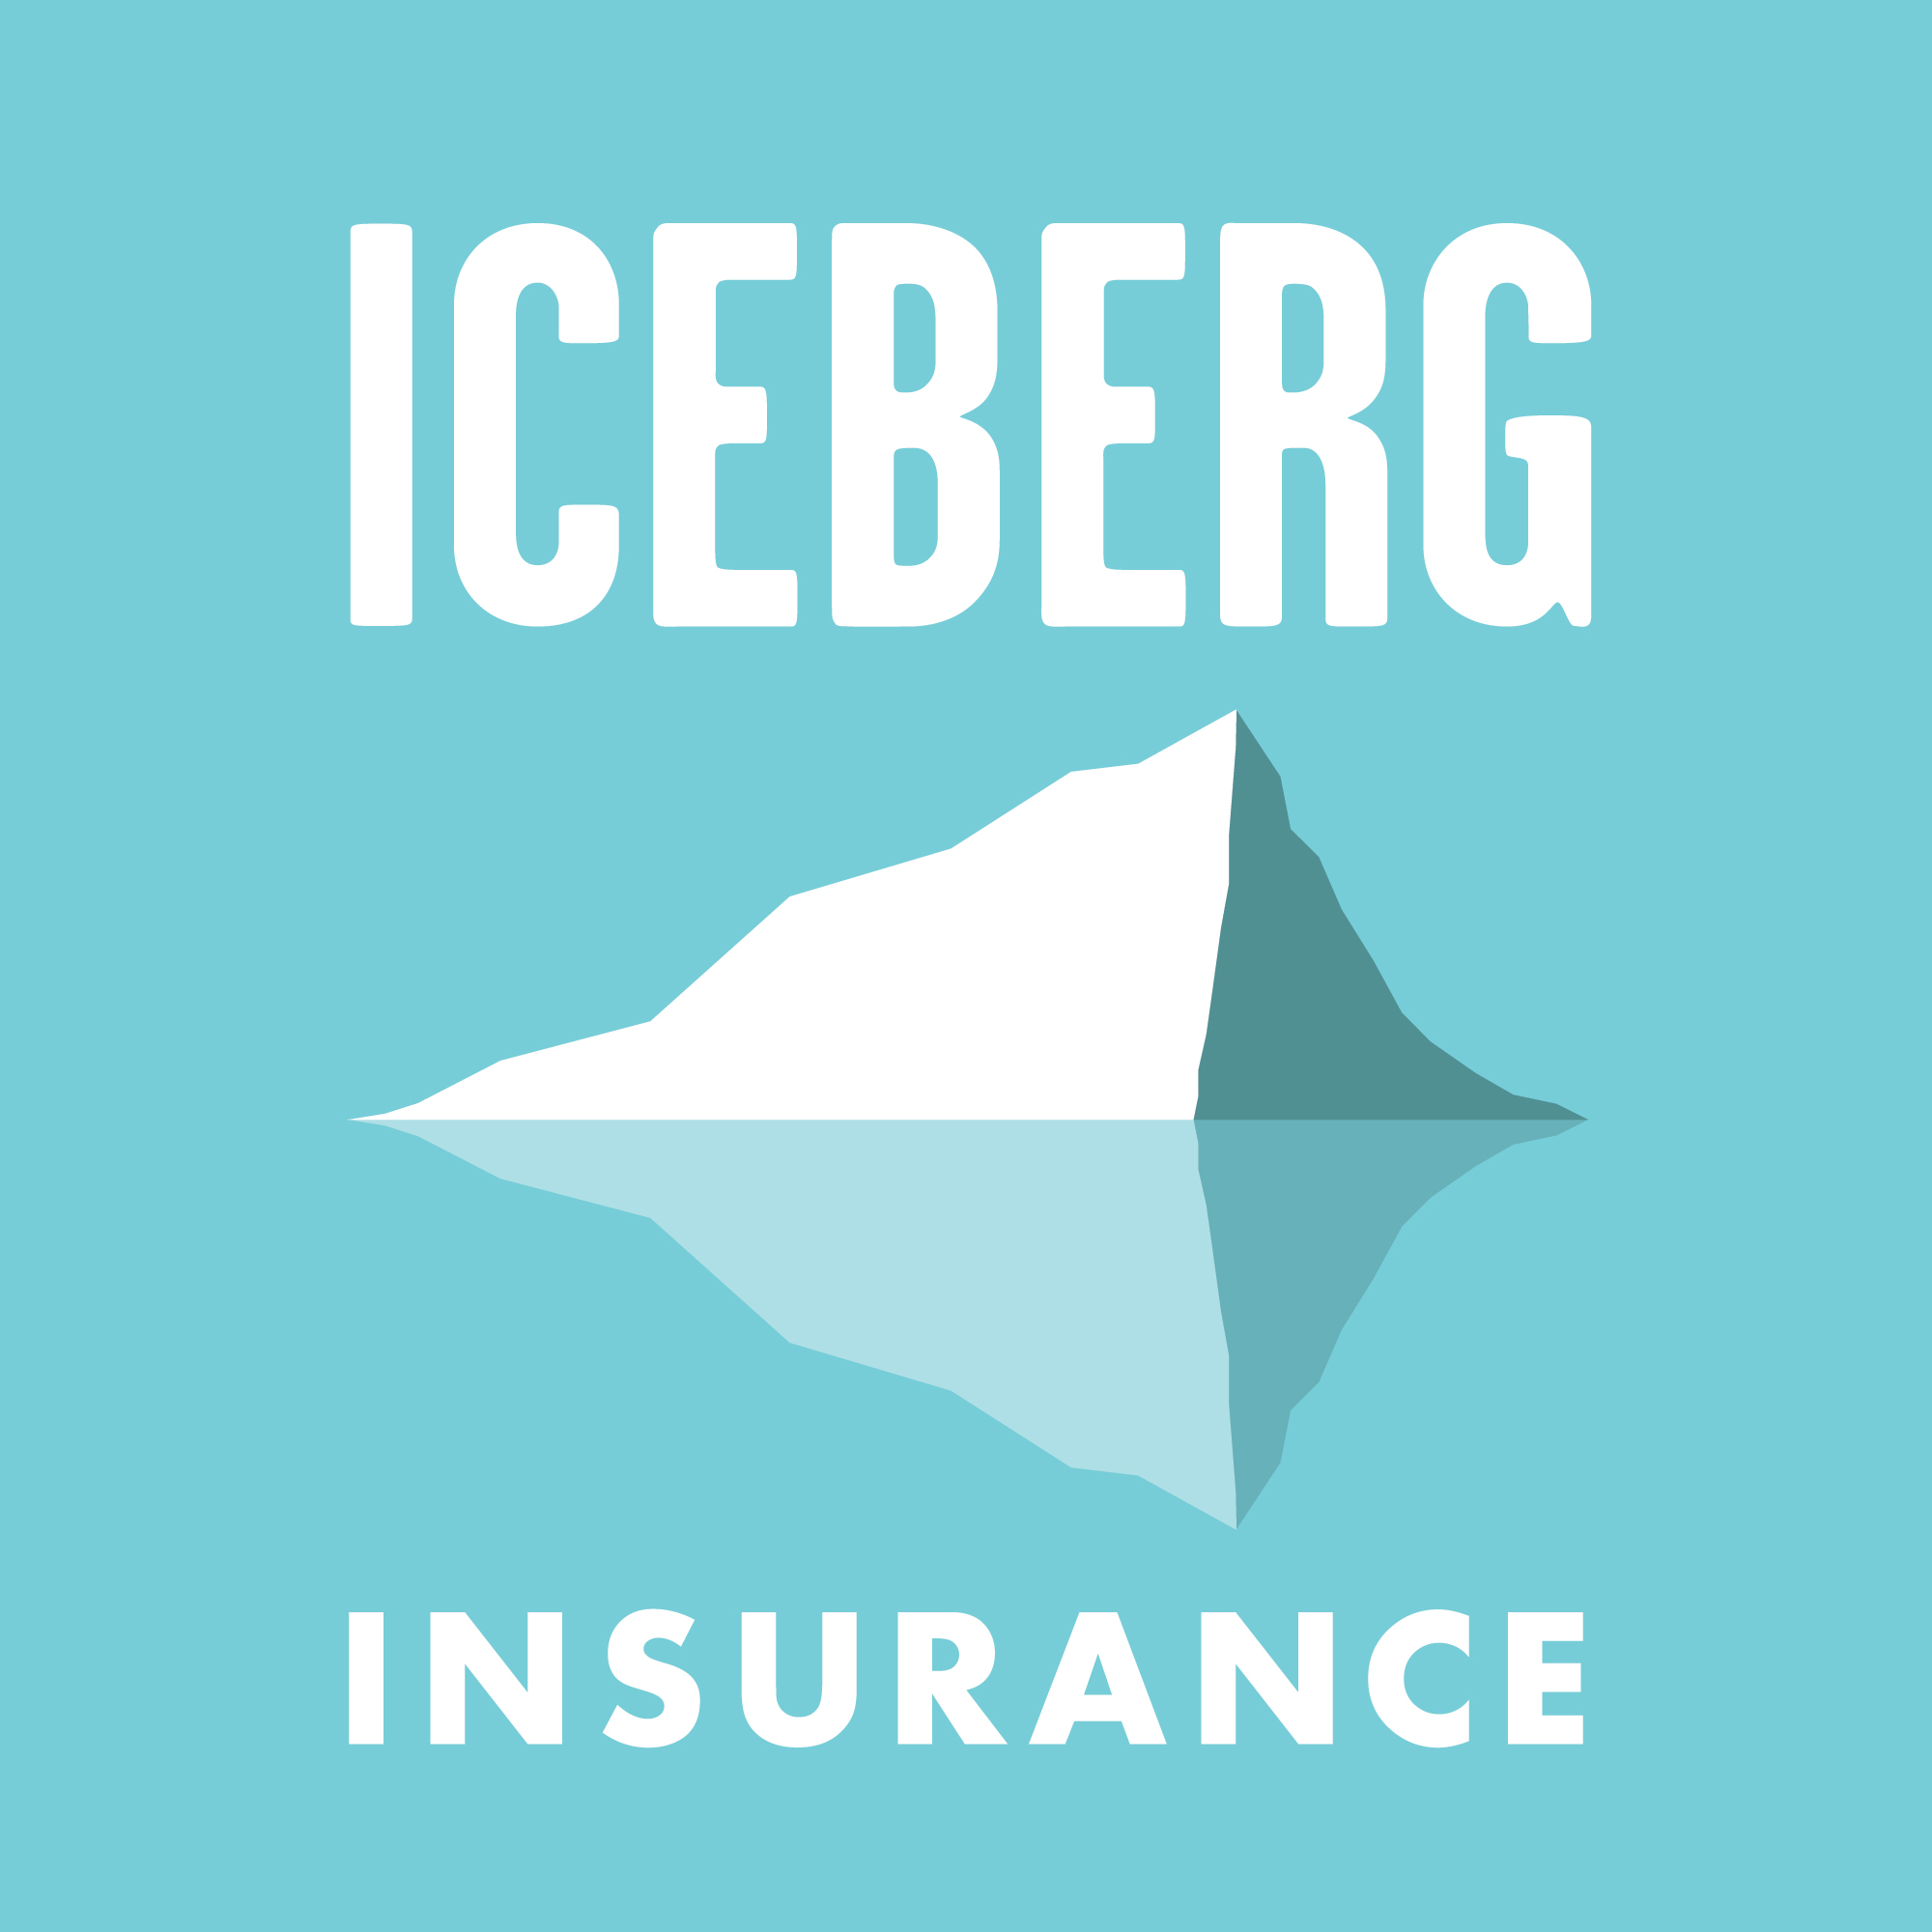 Iceberg Insurance | Brands of the Worldâ?¢ | Download vector logos ...